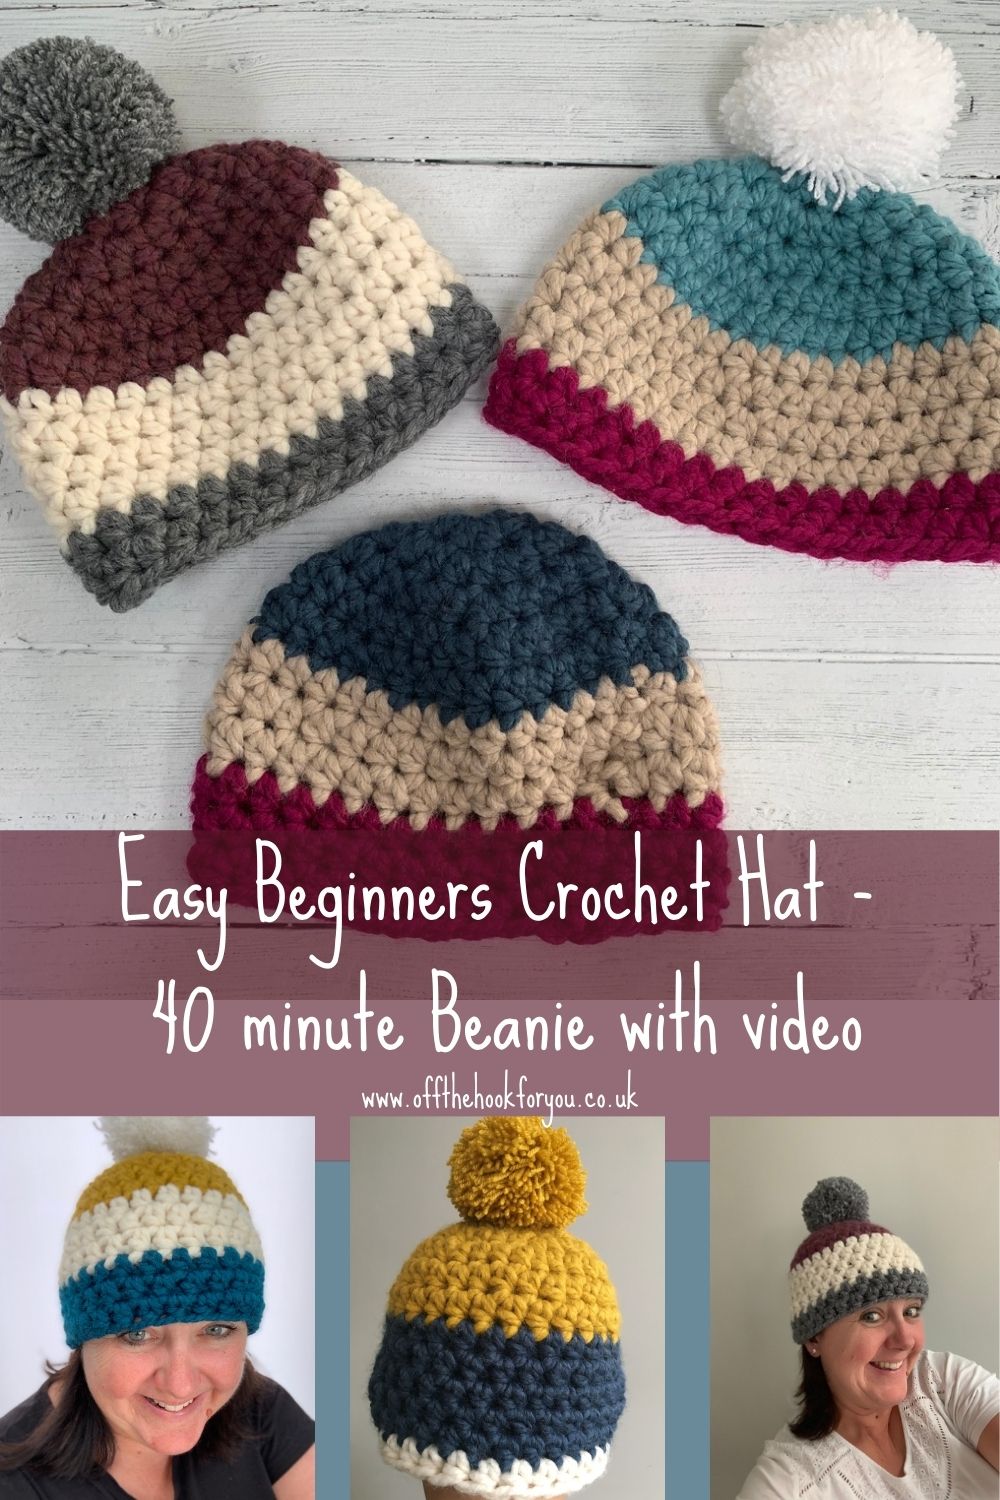 Easy quick beginners crochet hat - 40 minute make